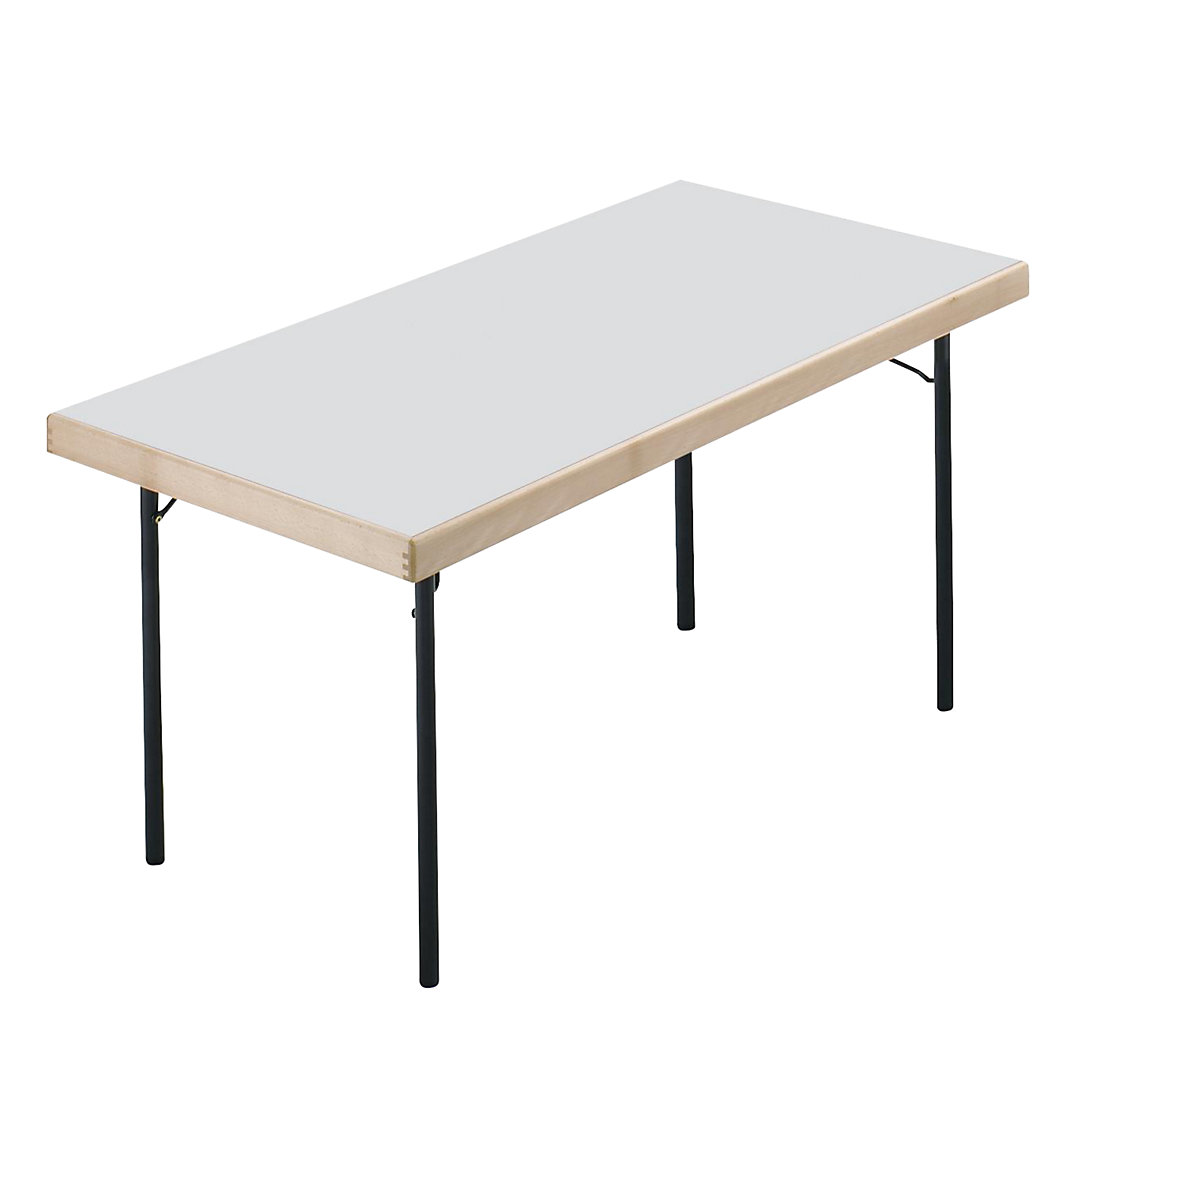 Sklápací stôl, podstavec so 4 nohami, 1500 x 800 mm, podstavec antracitová, doska svetlošedá-5